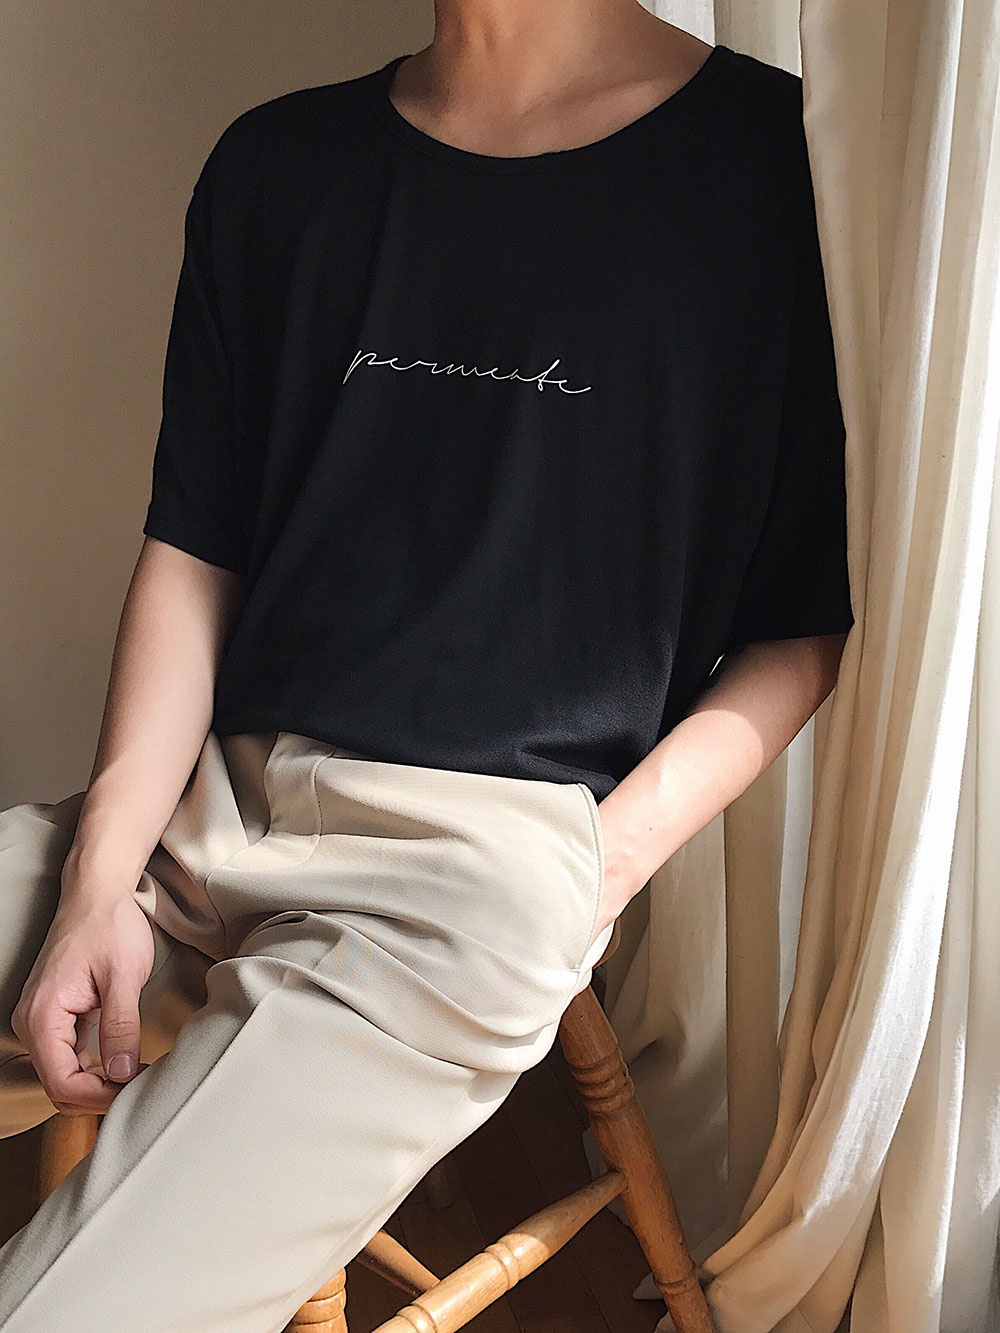 Permeate T-shirt (Black color)